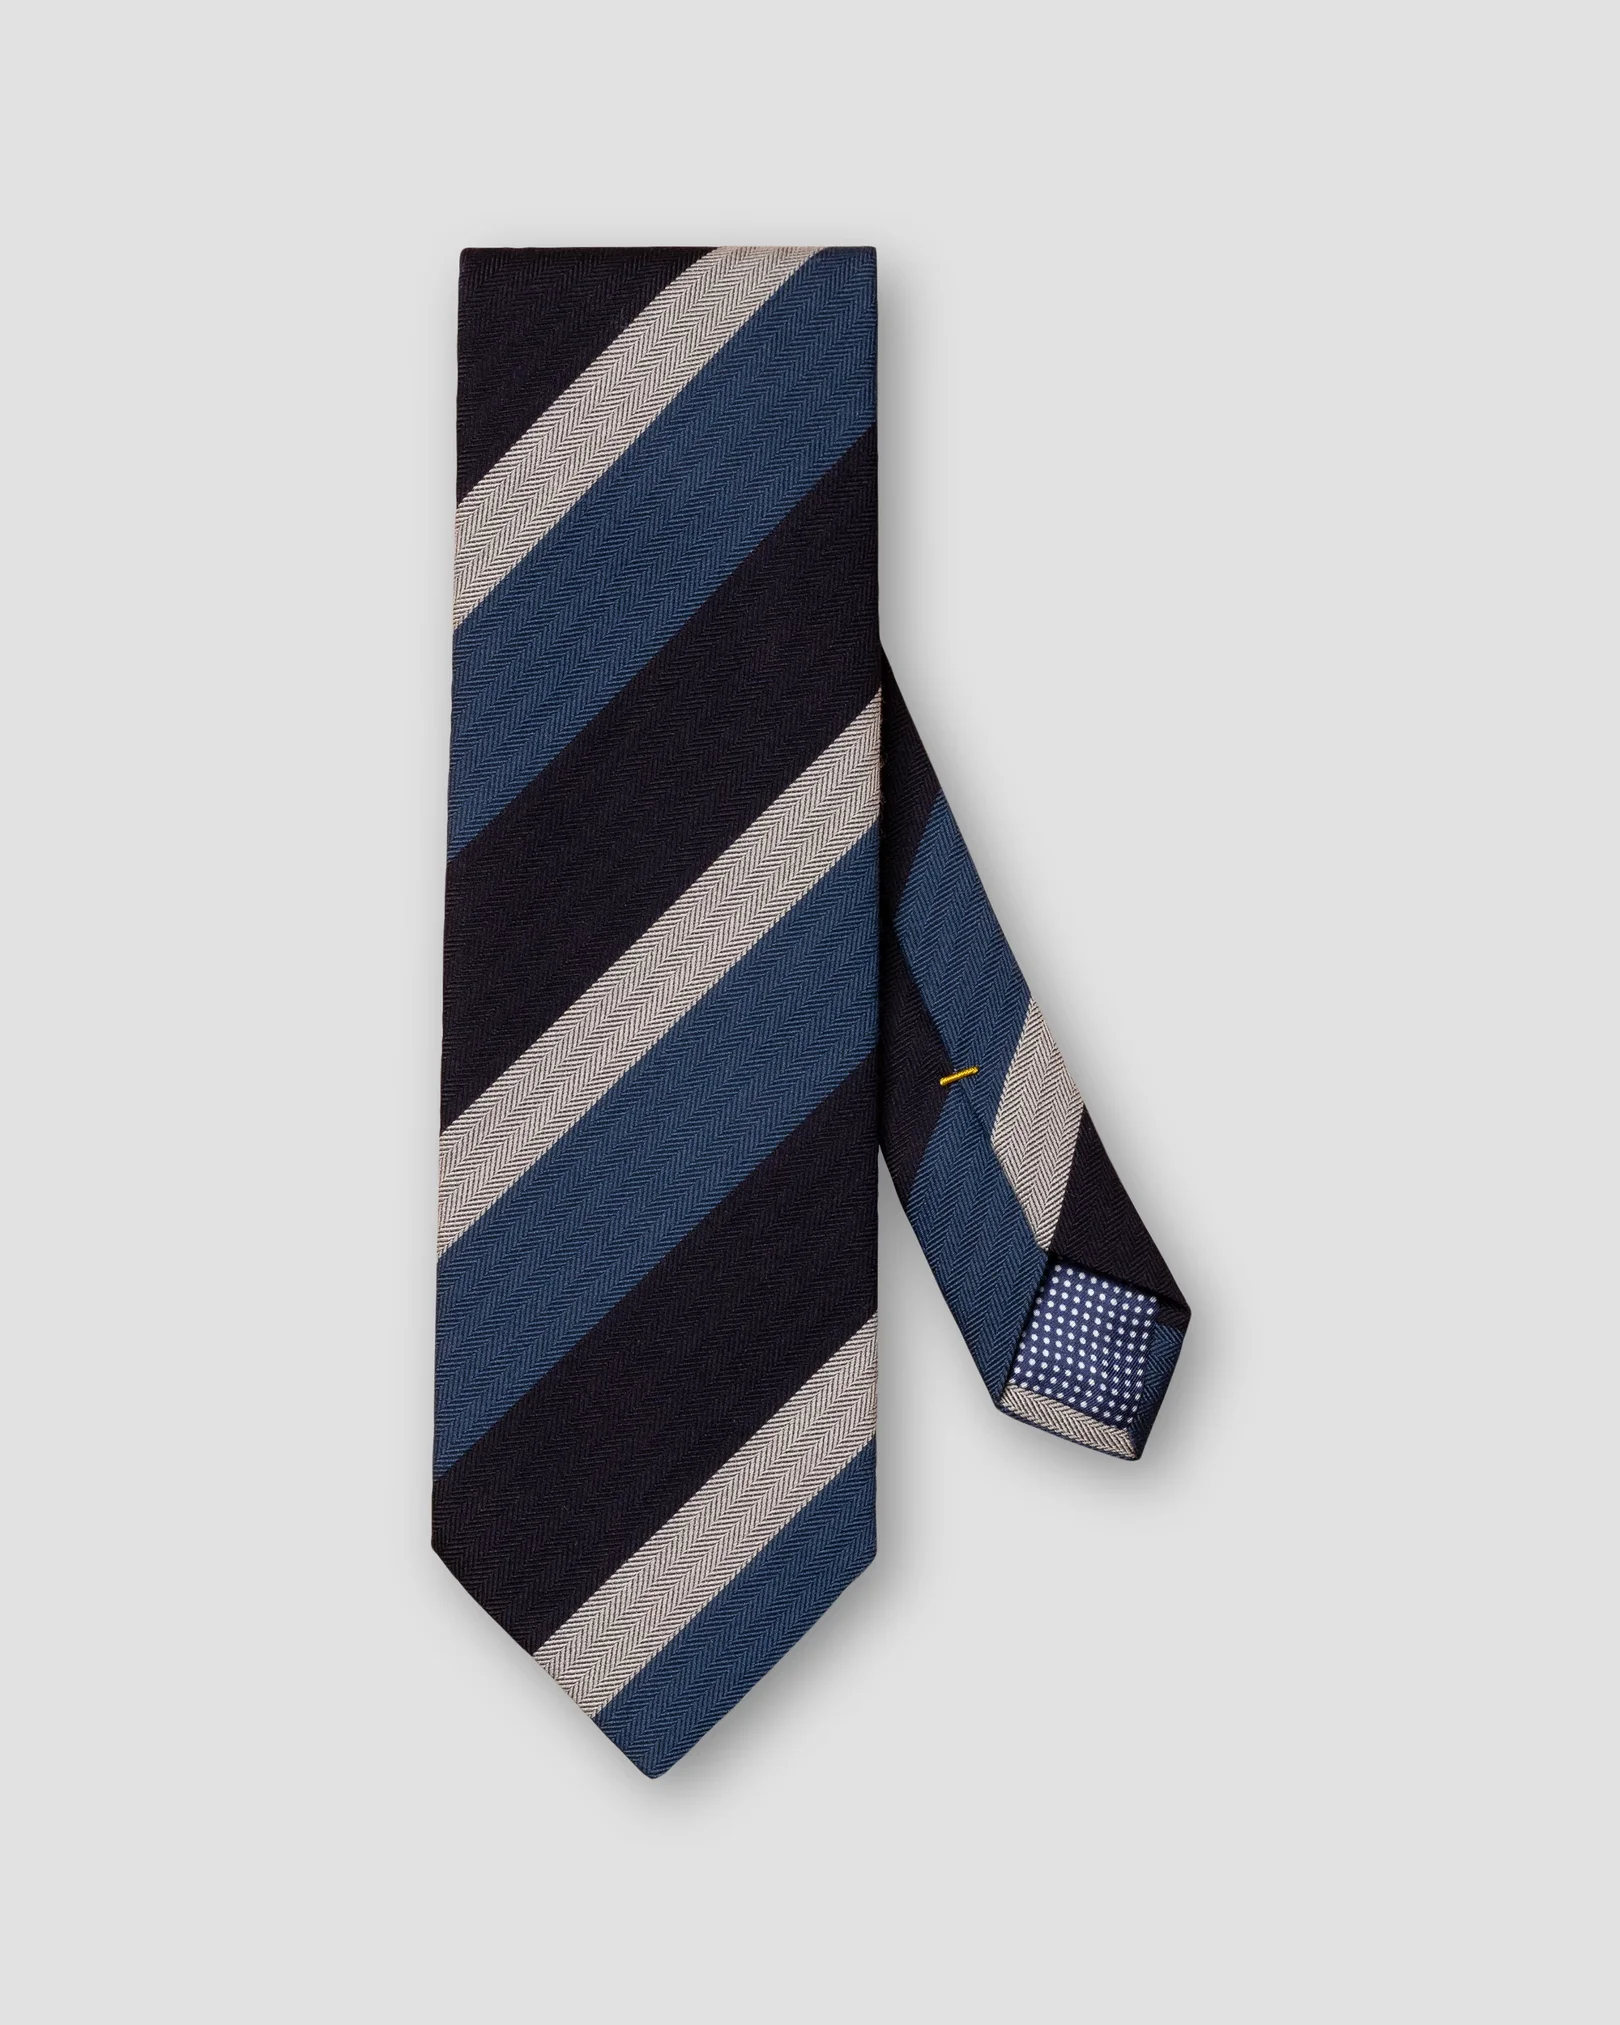 Eton - navy blue striped tie